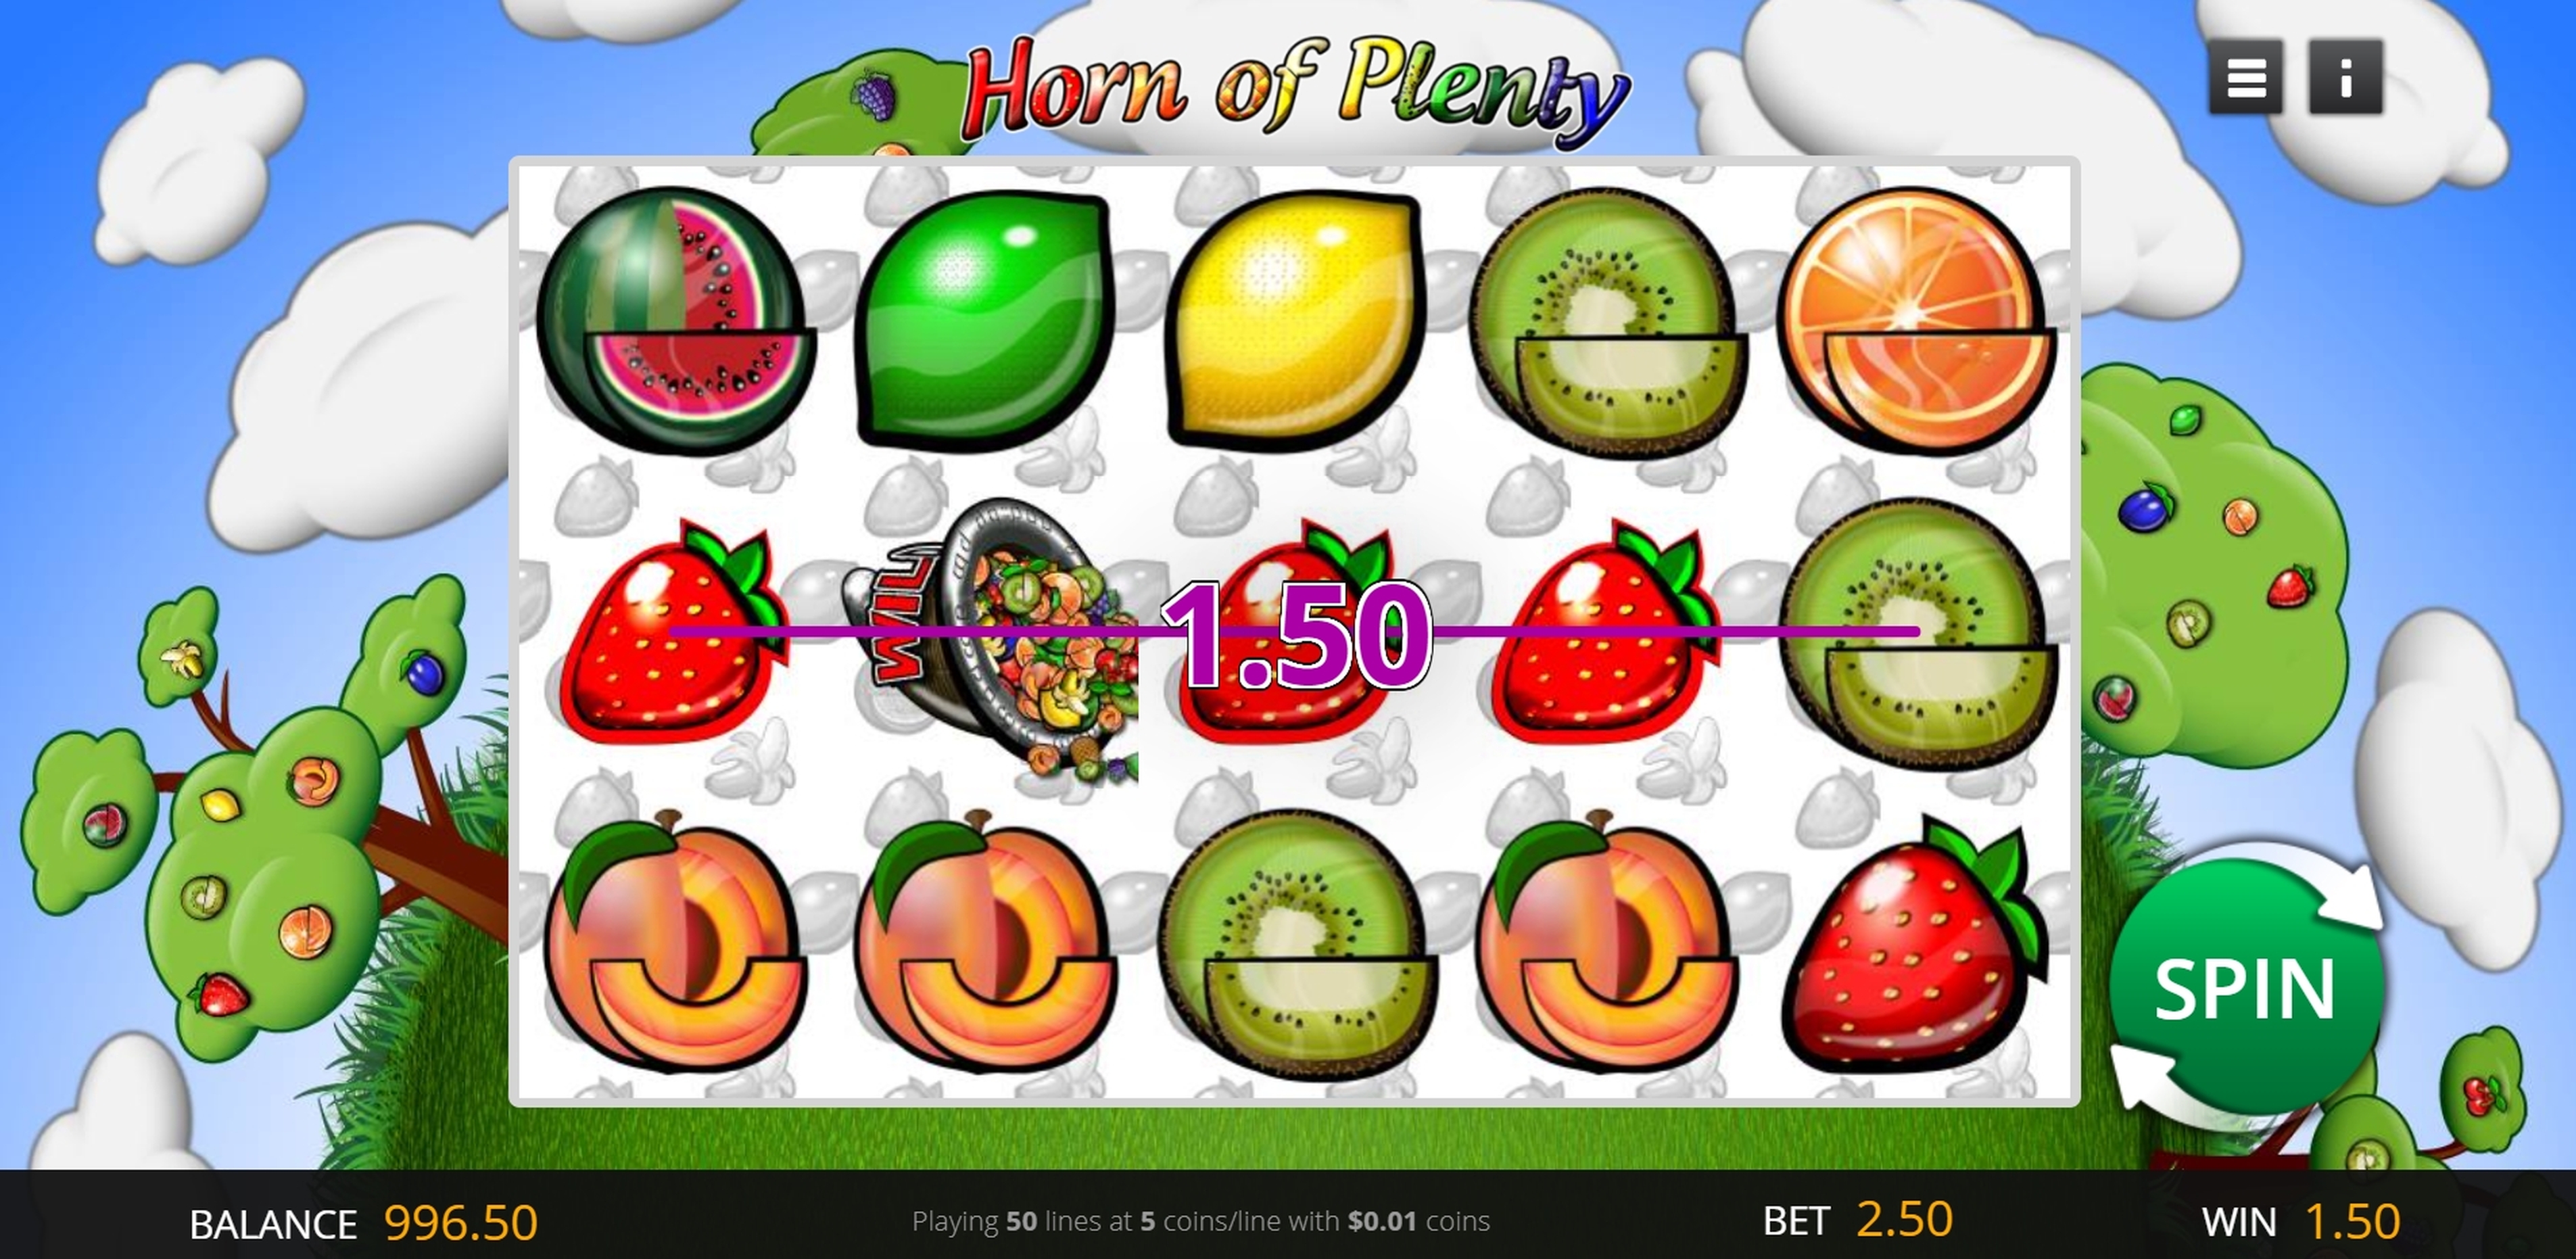 Win Money in Horn of Plenty Free Slot Game by Genii